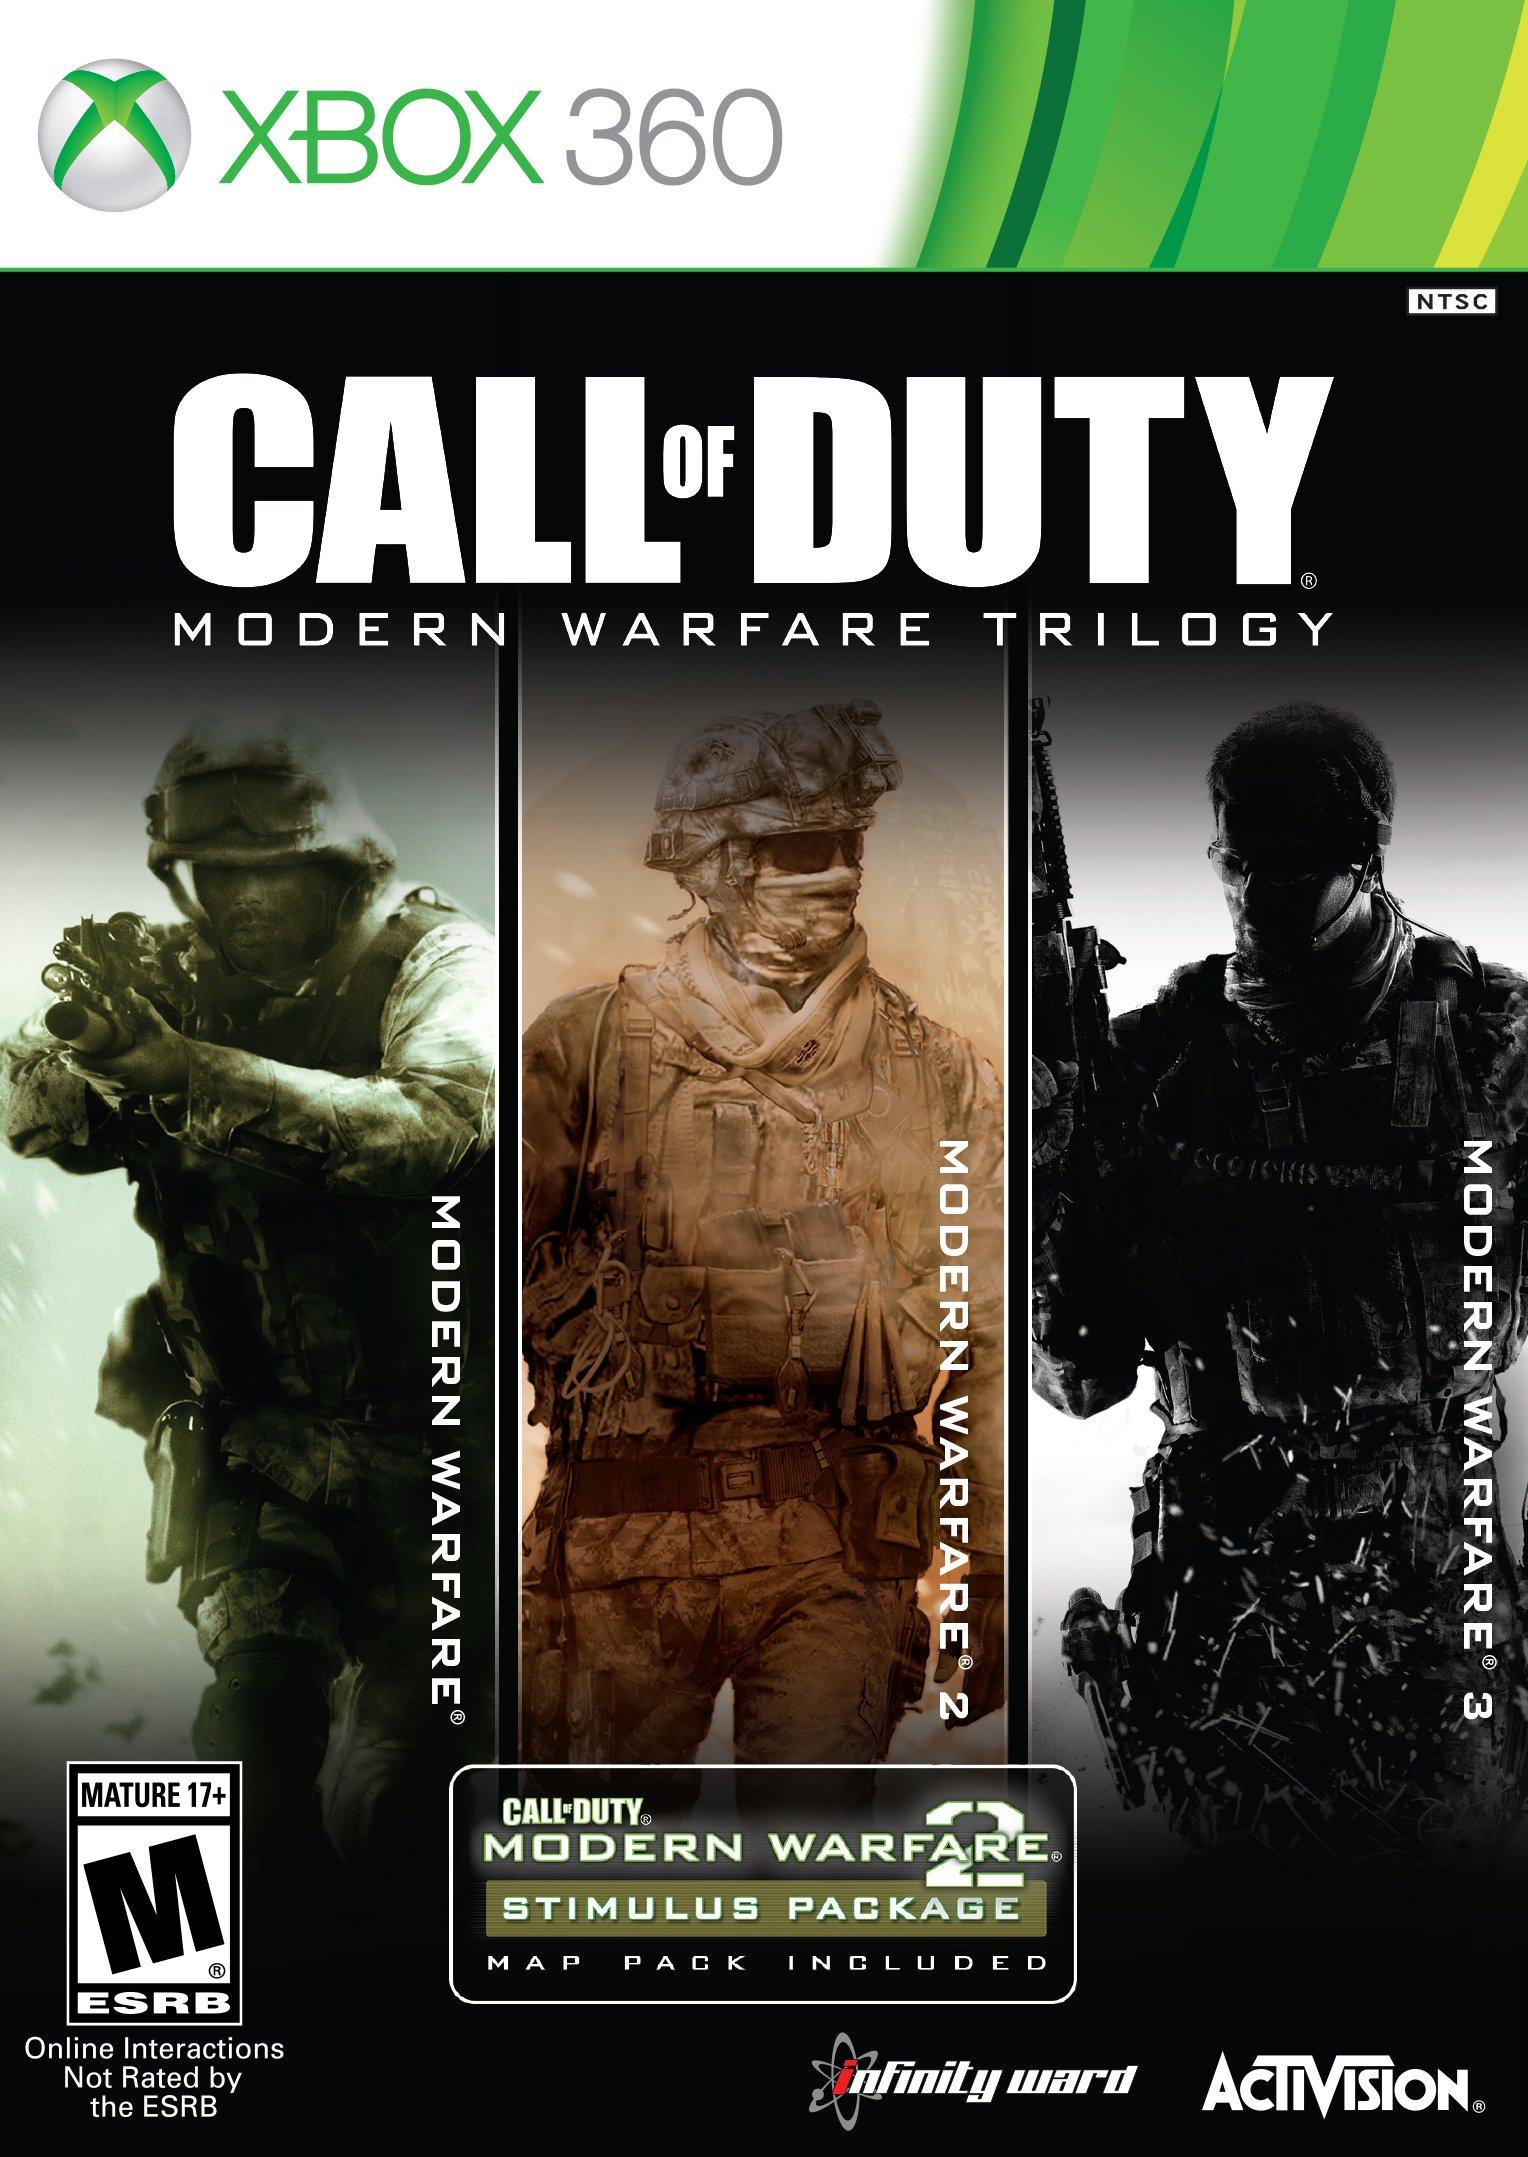 Call of Duty Modern Warfare Trilogy - Xbox 360